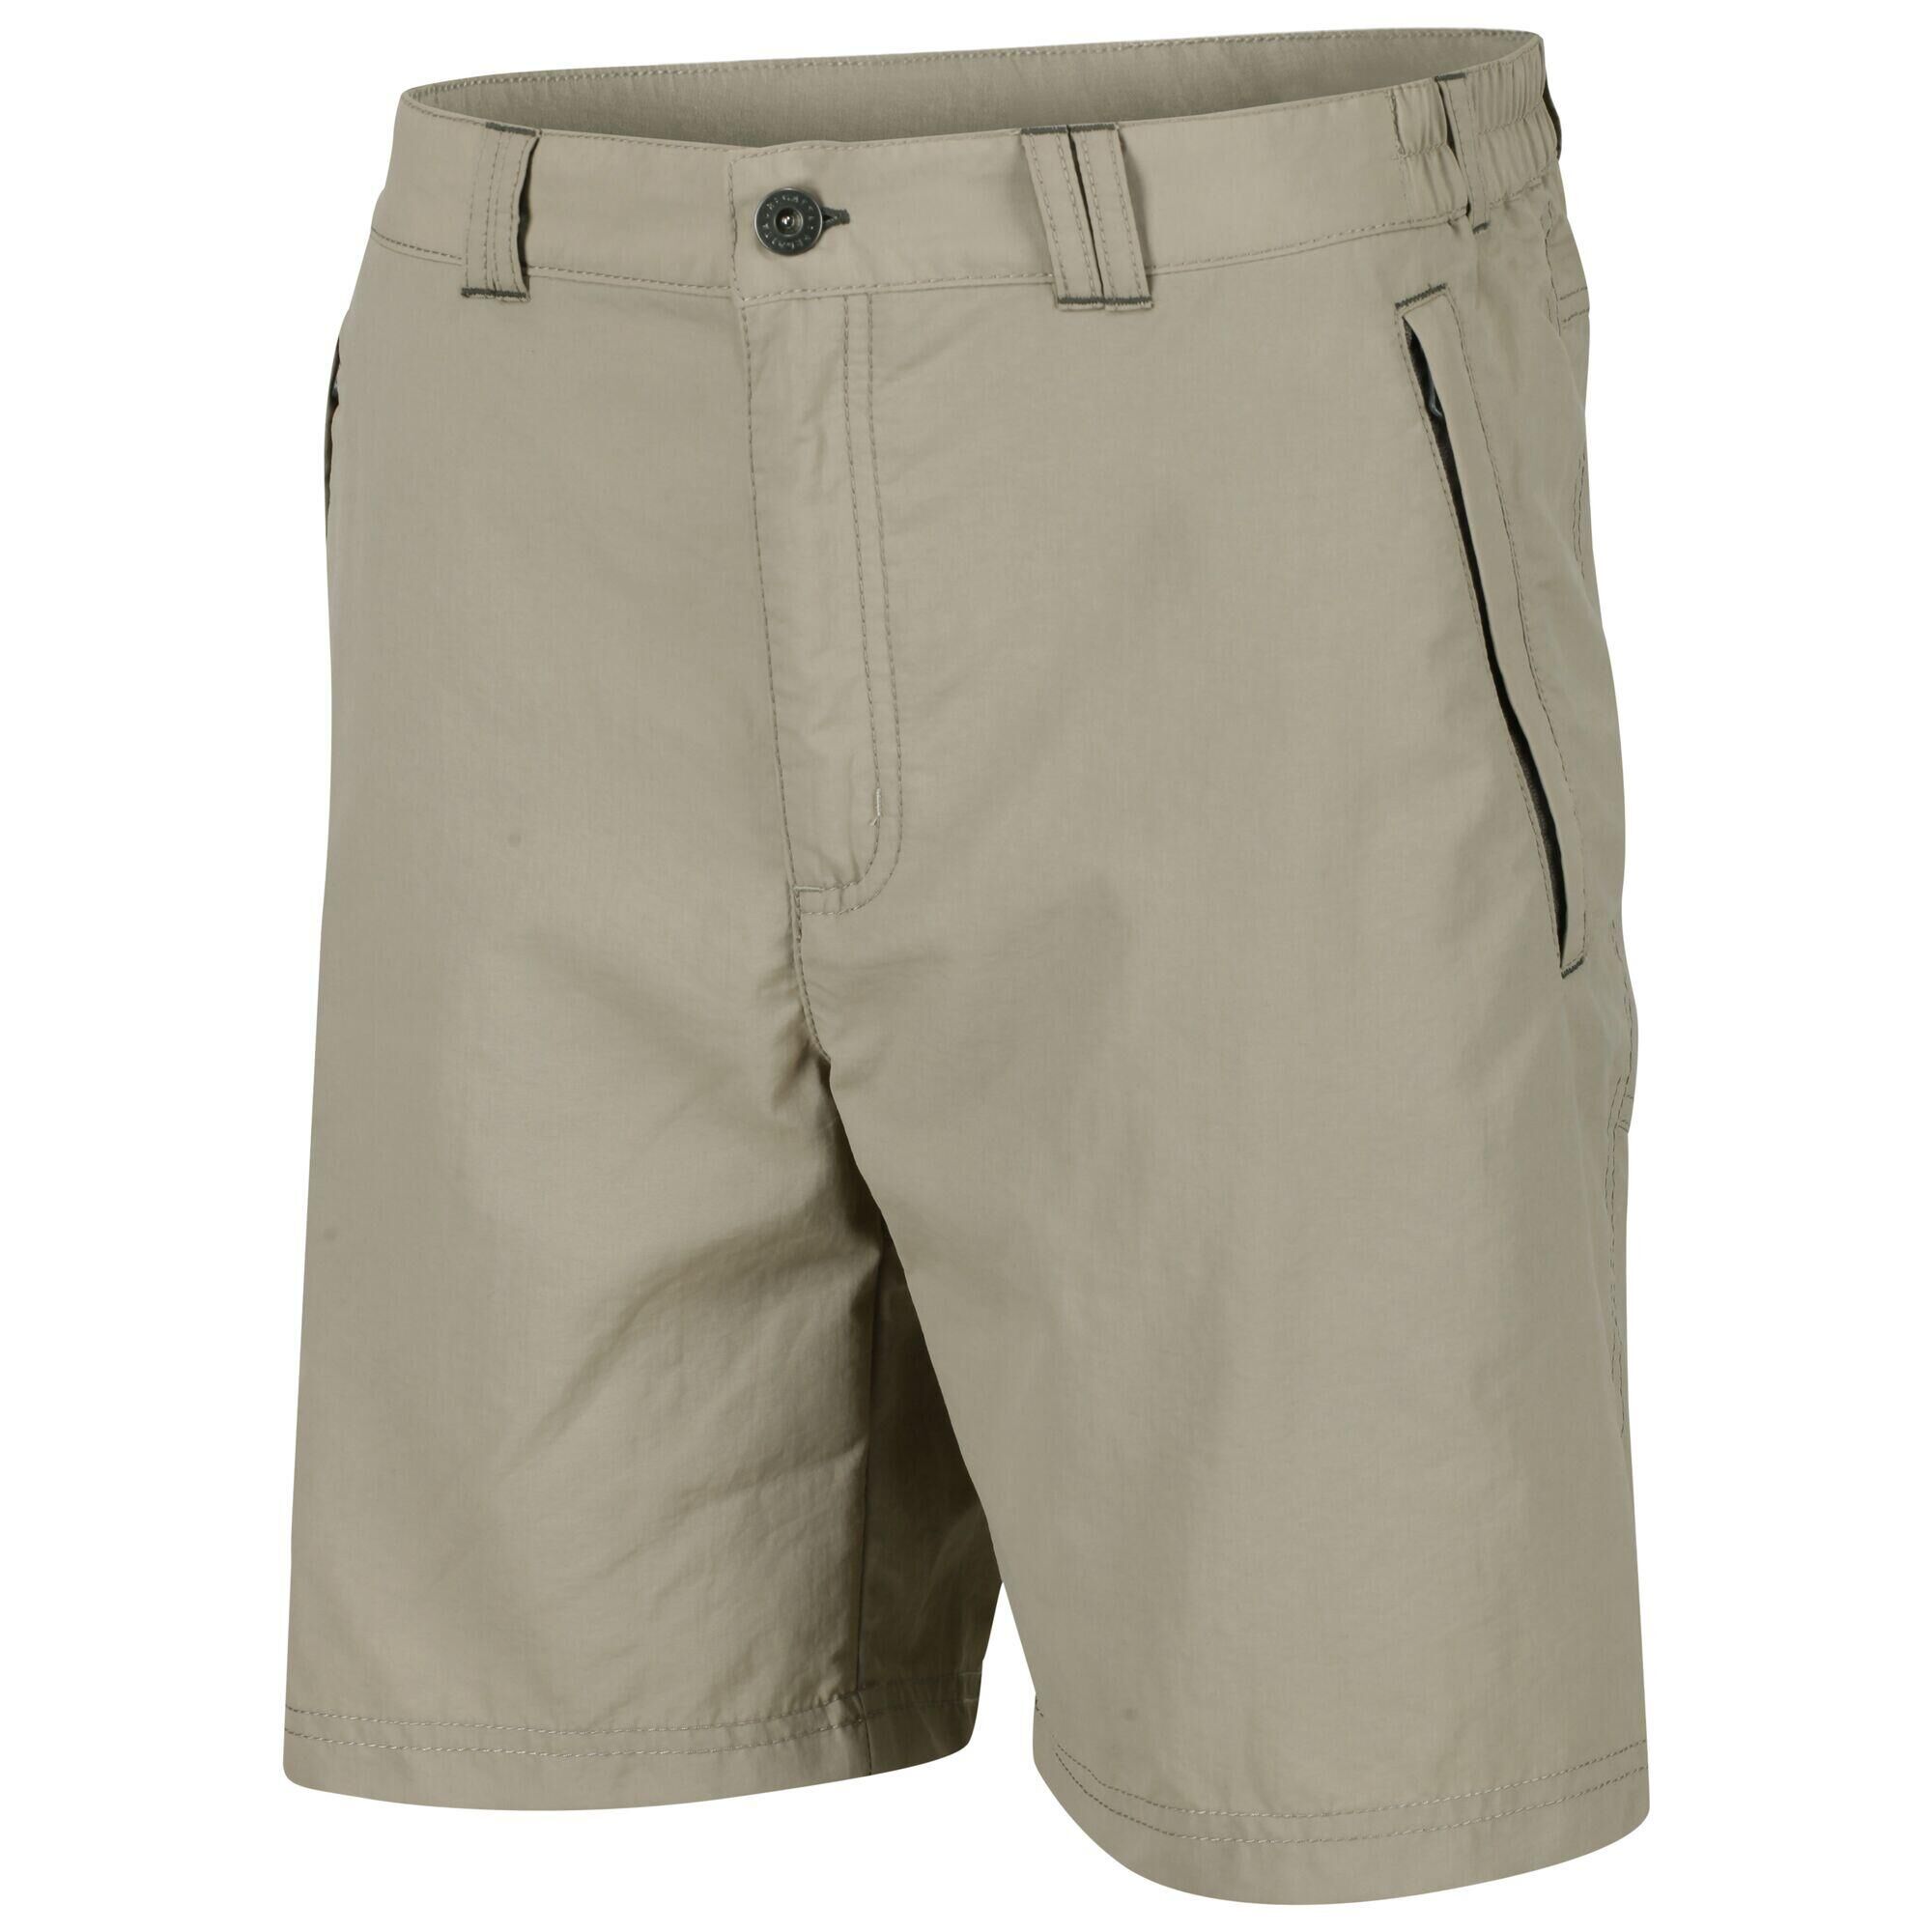 REGATTA Leesville II Men's Hiking Shorts - Parchment